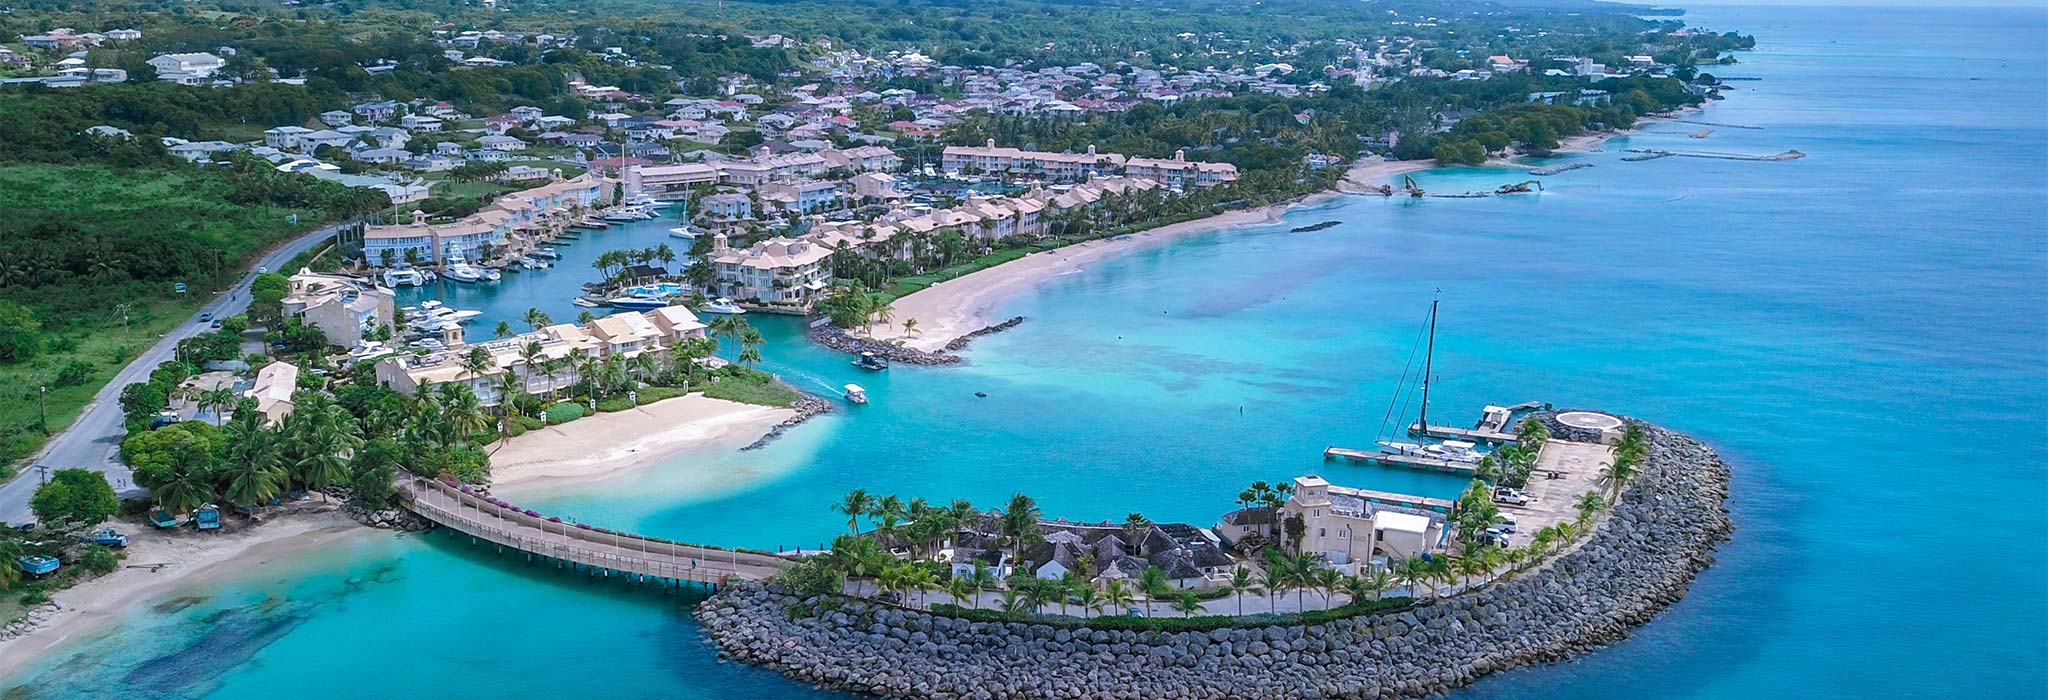 Barbados City View